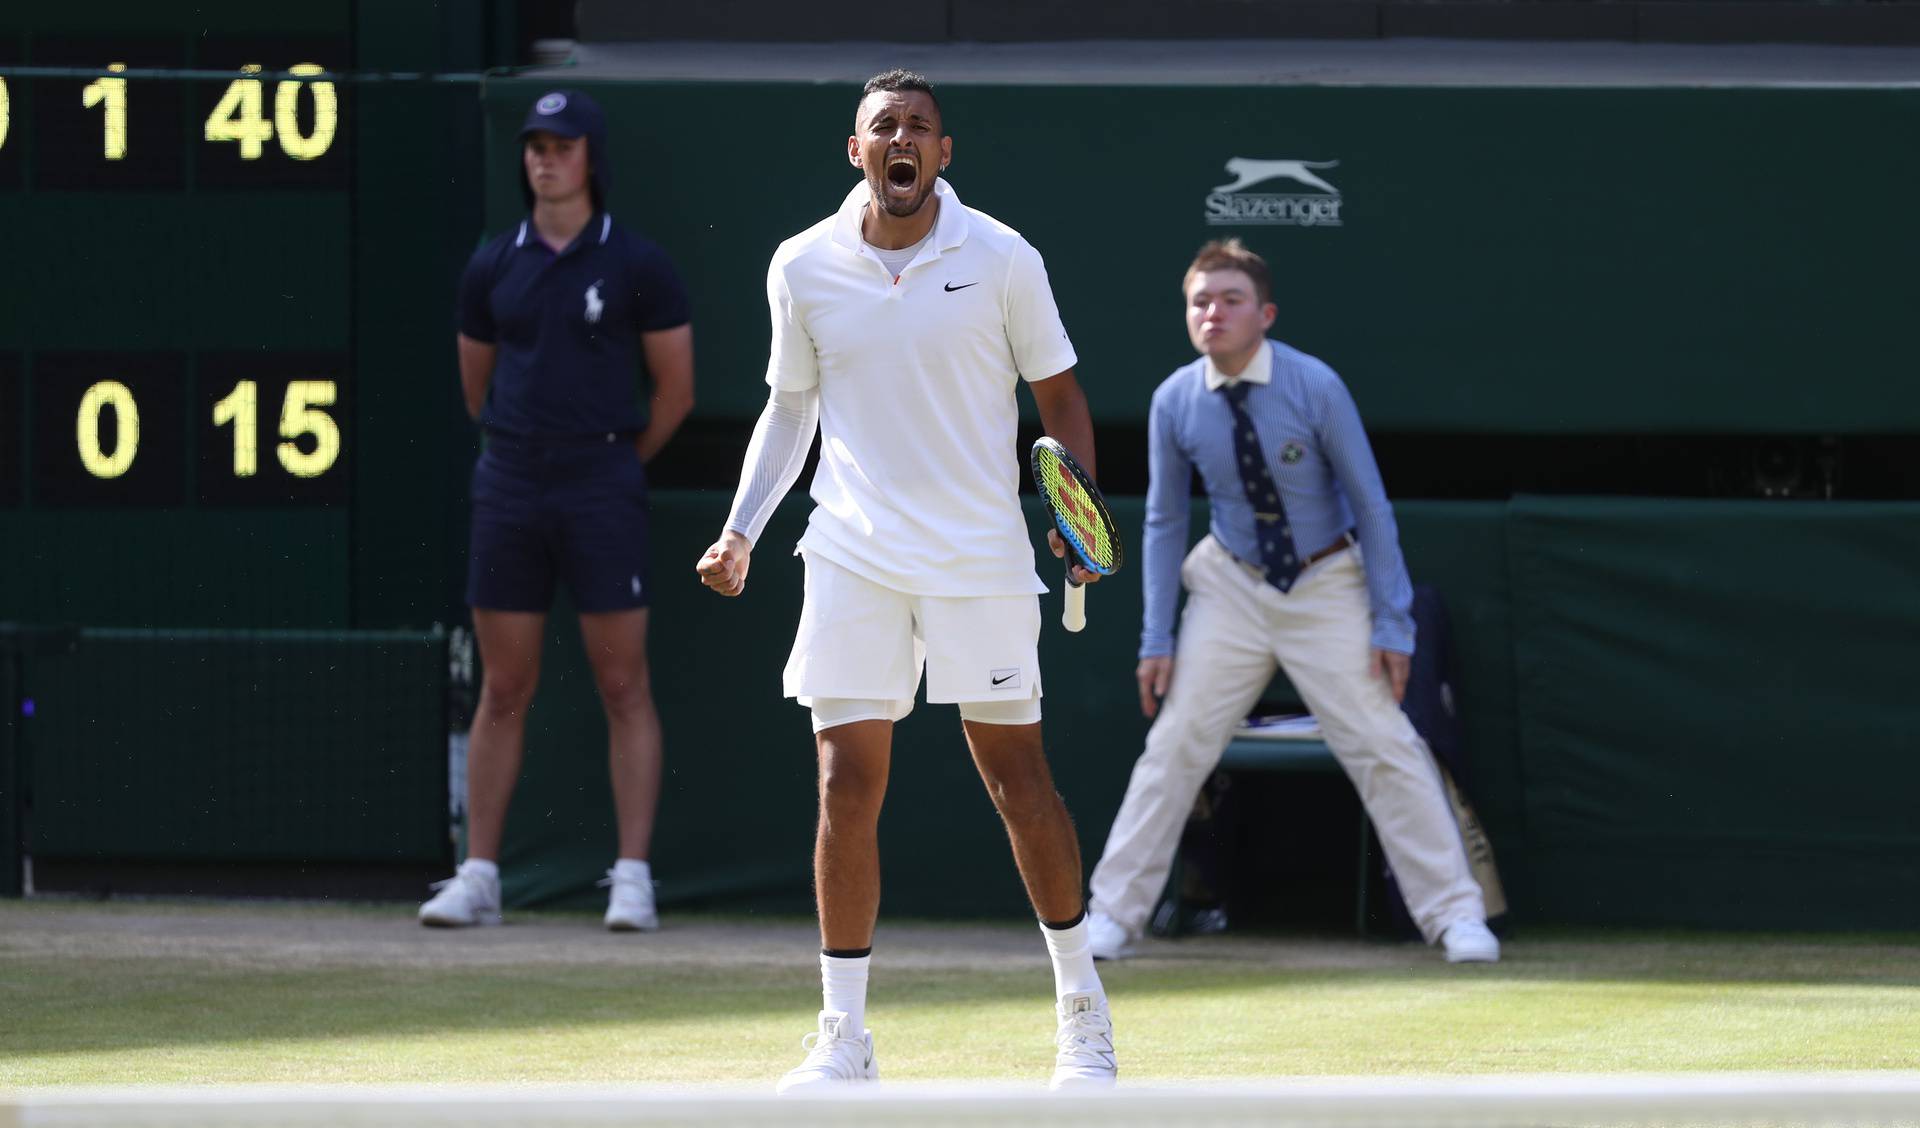 Wimbledon 2019 Day 4